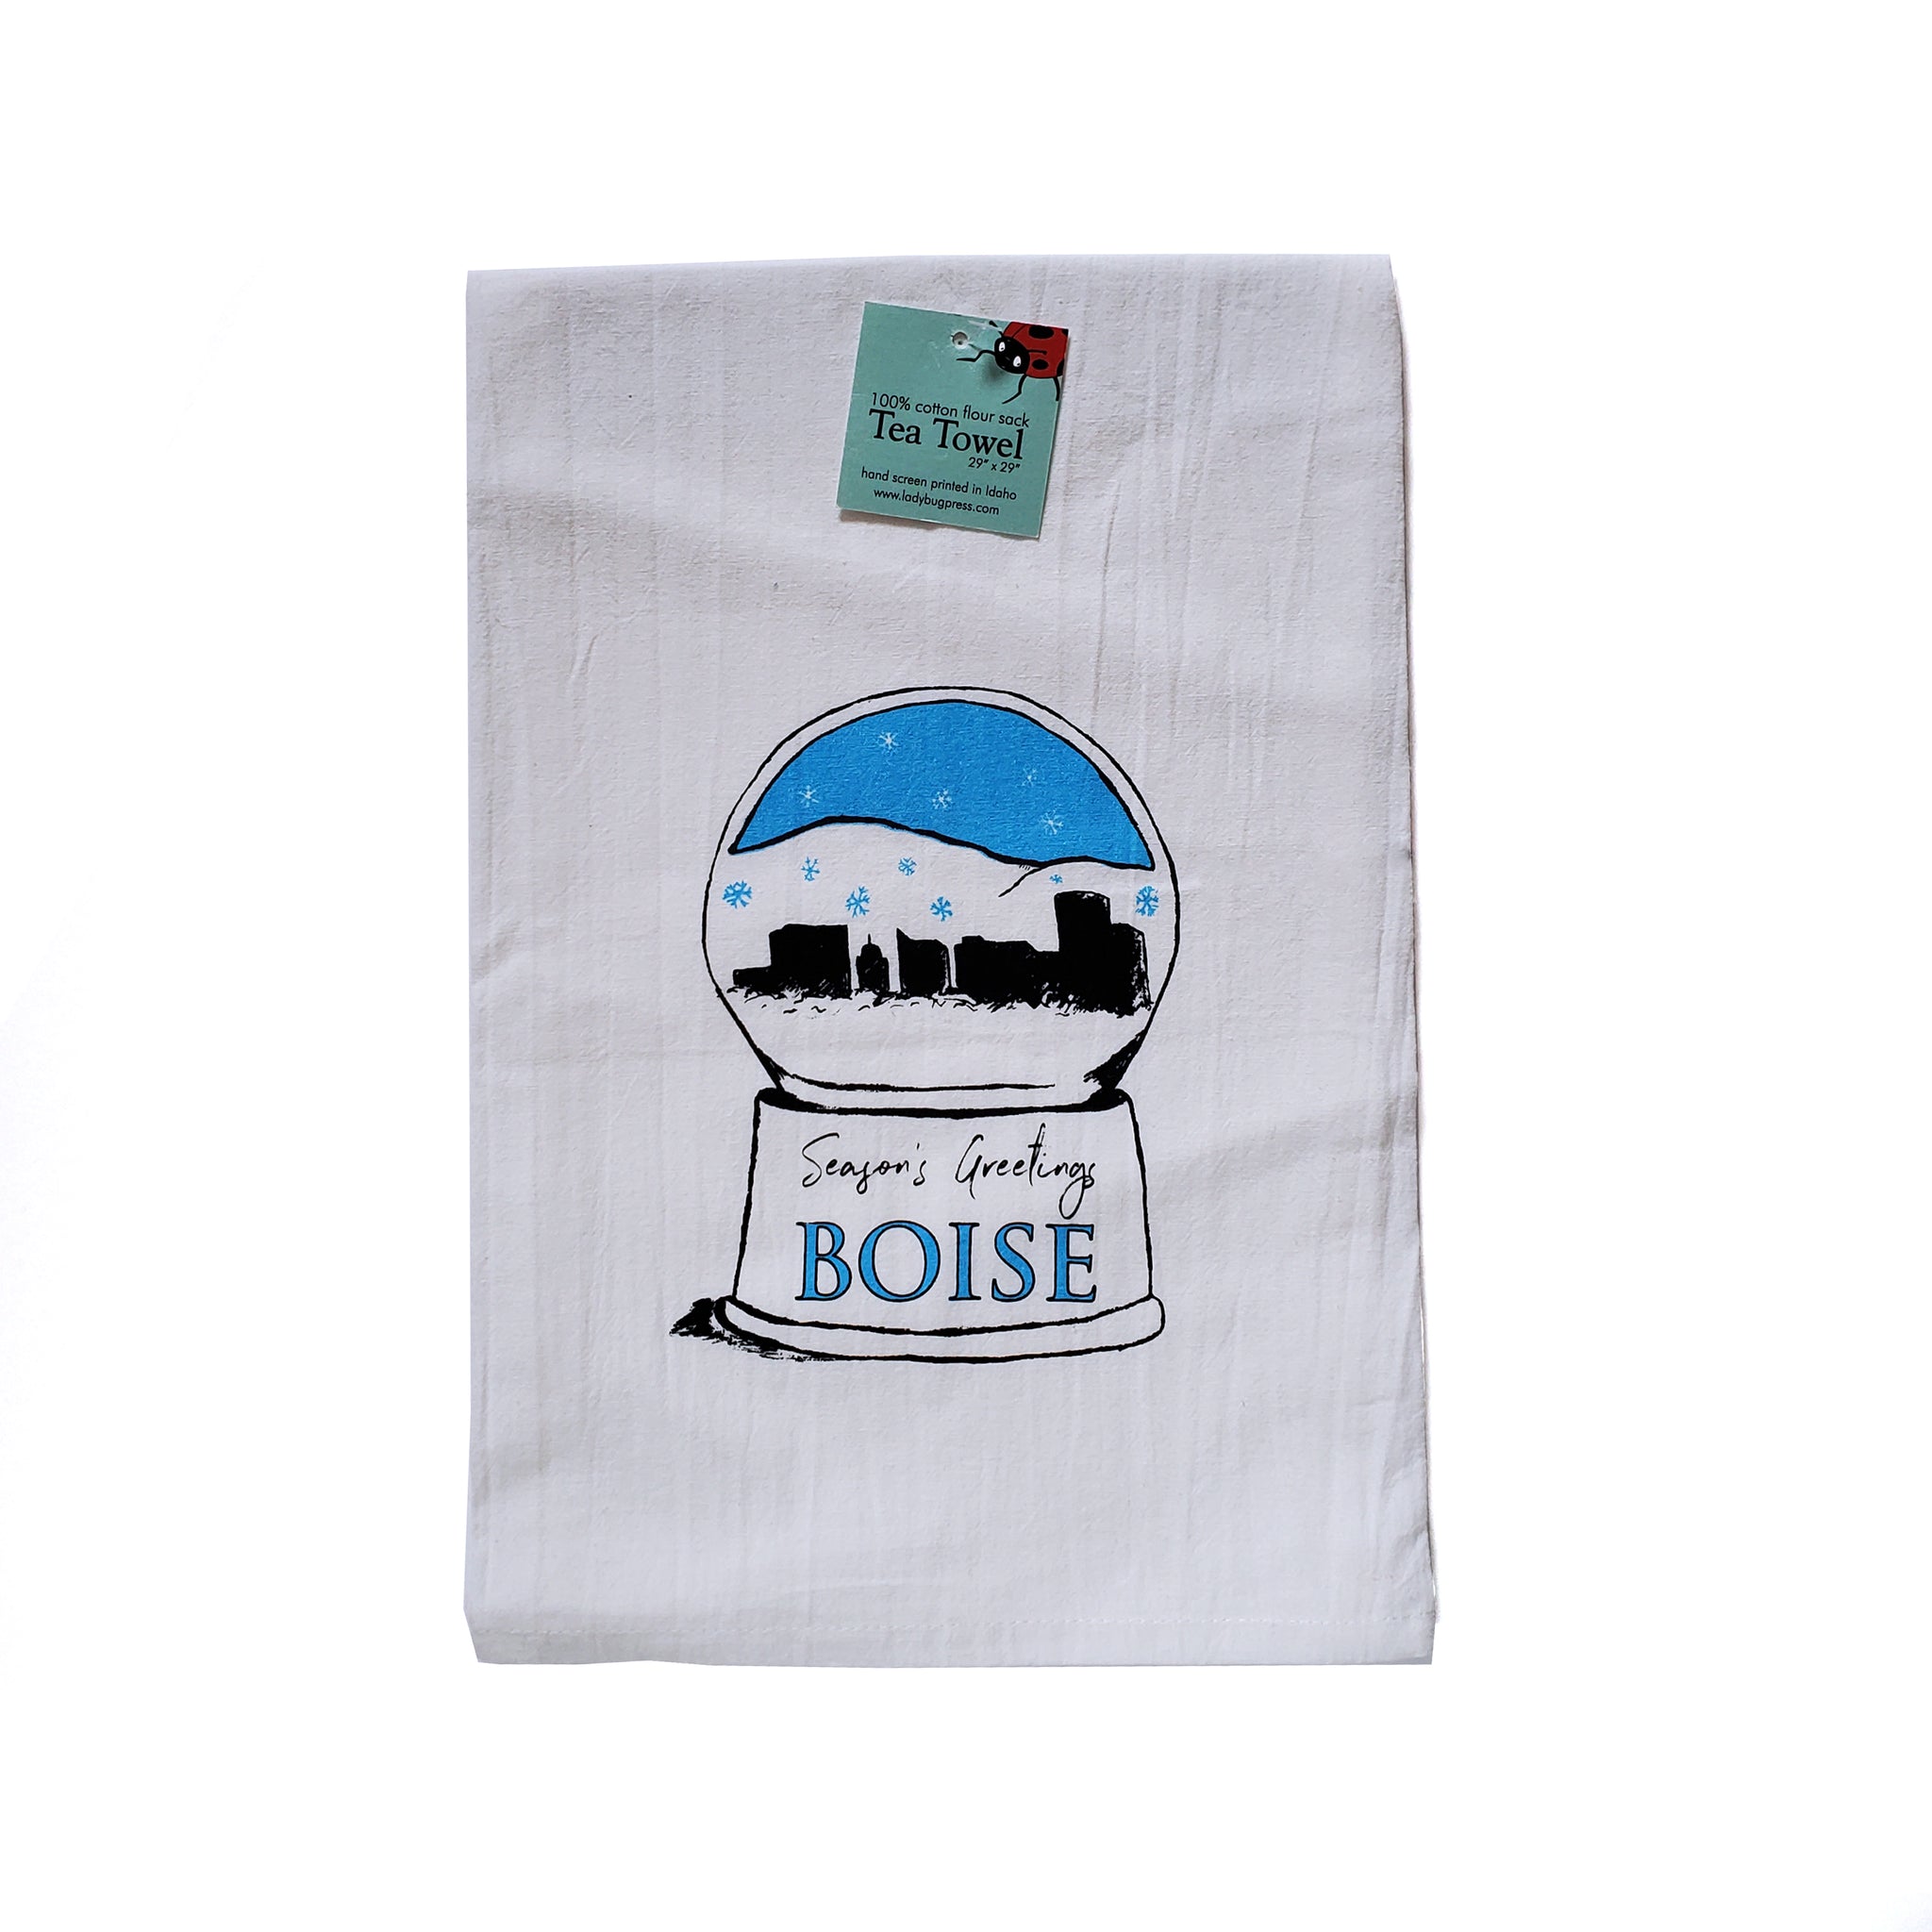 Boise Snowglobe Tea Towel, flour sack towel